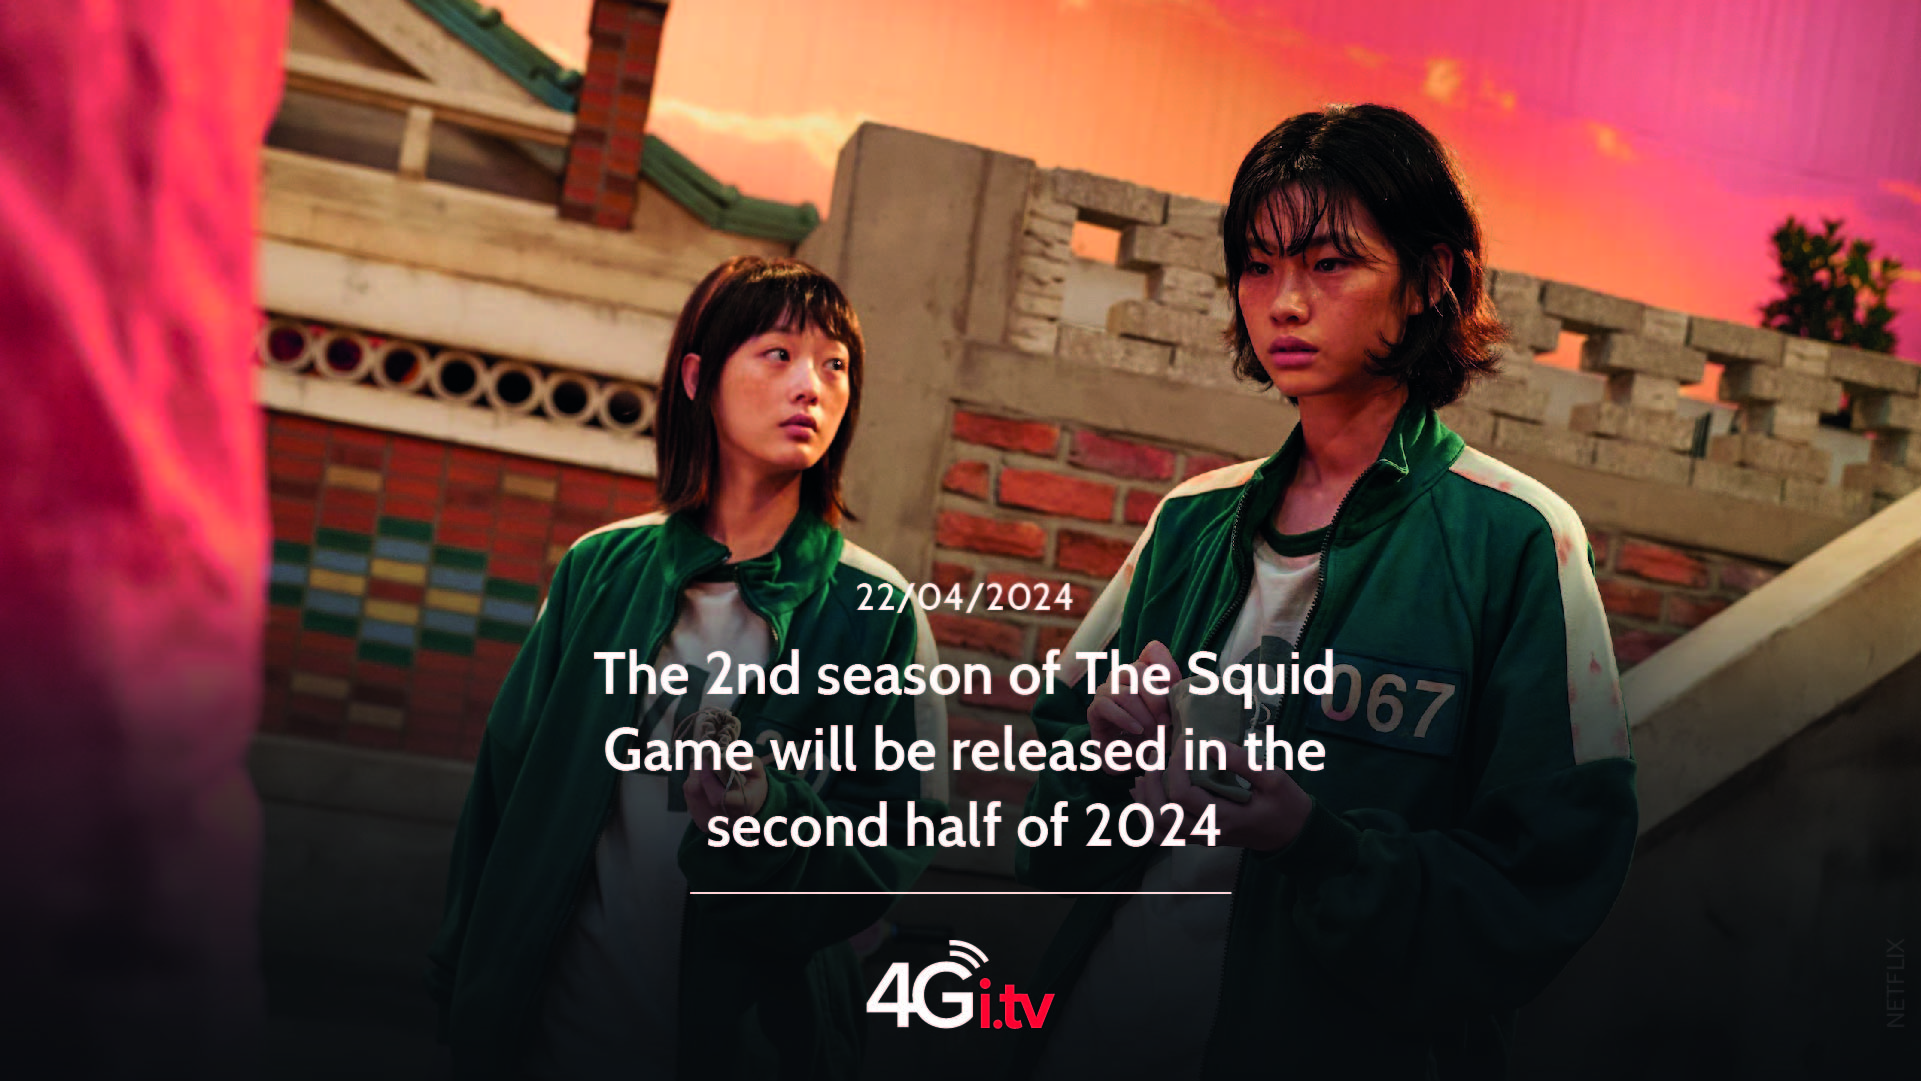 Lesen Sie mehr über den Artikel The 2nd season of The Squid Game will be released in the second half of 2024 